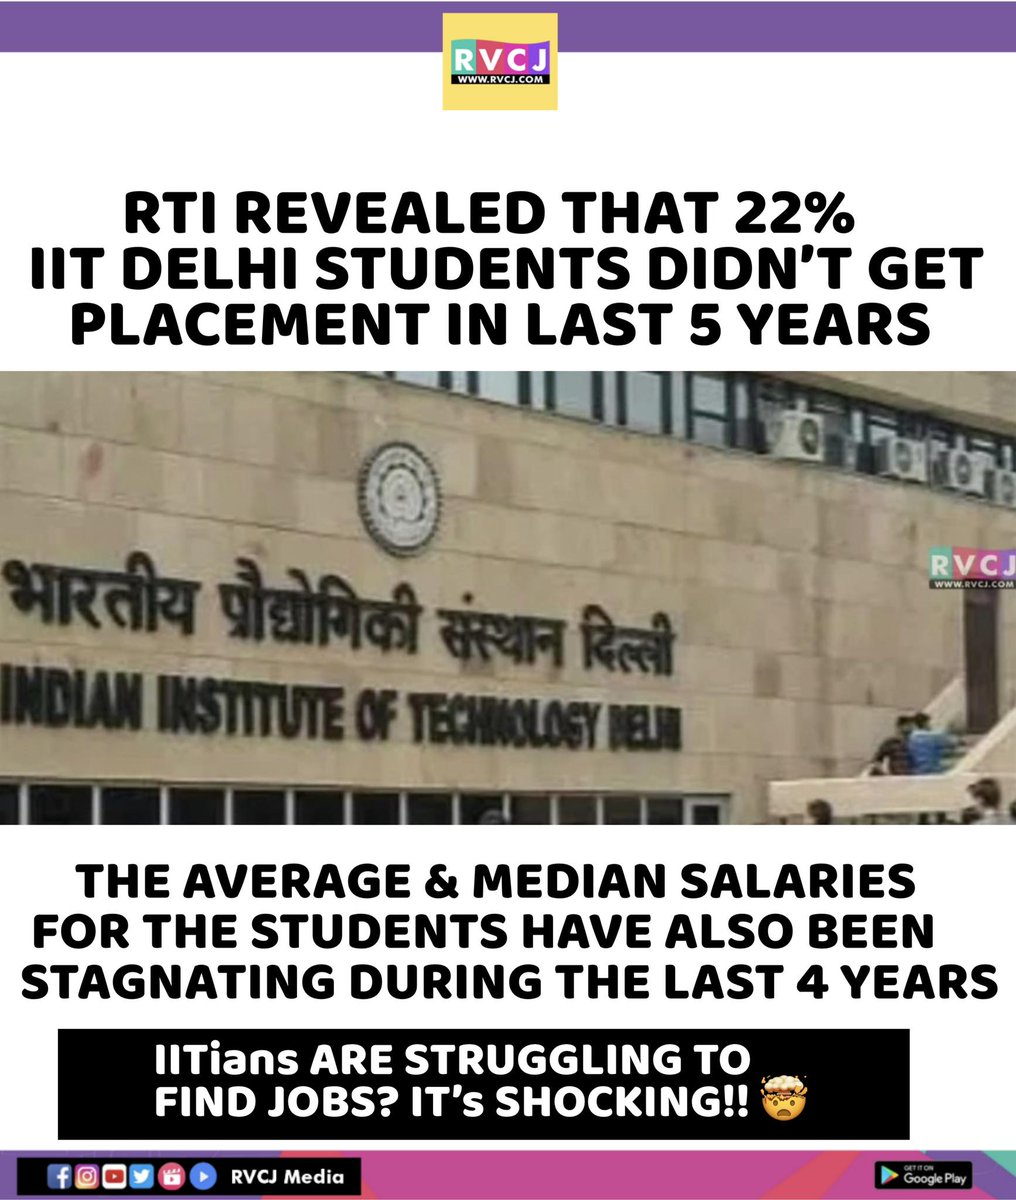 The Placement of IIT Delhi